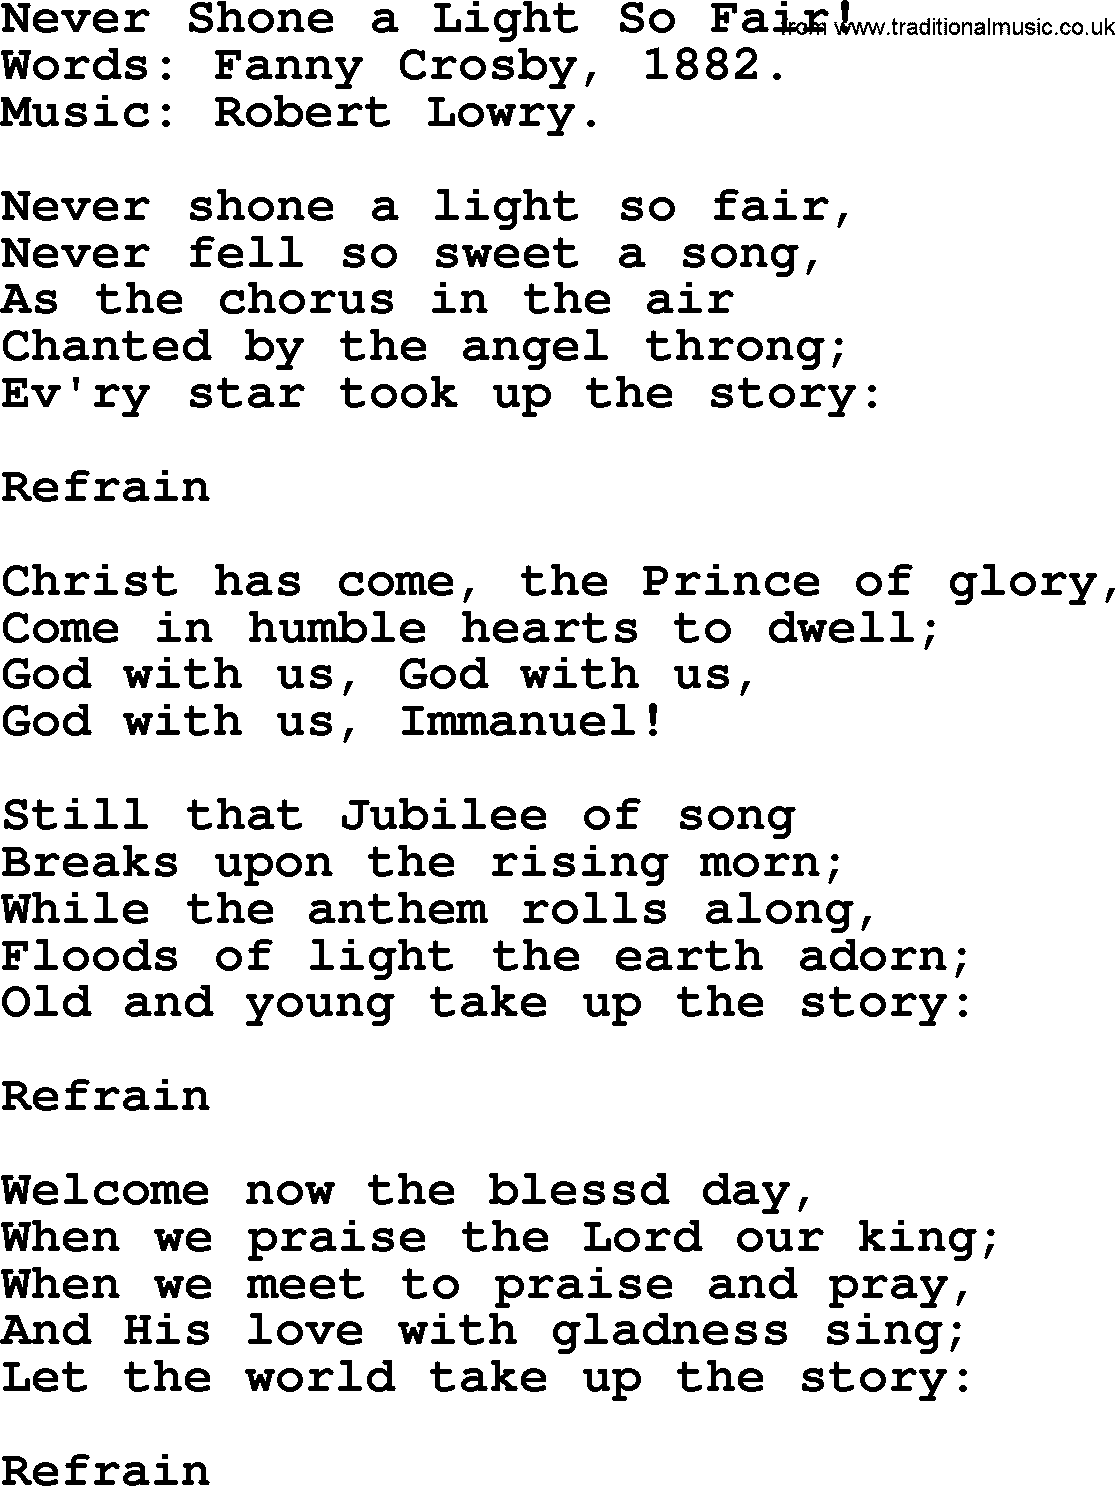 Christmas Hymns, Carols and Songs, title: Never Shone A Light So Fair!, lyrics with PDF